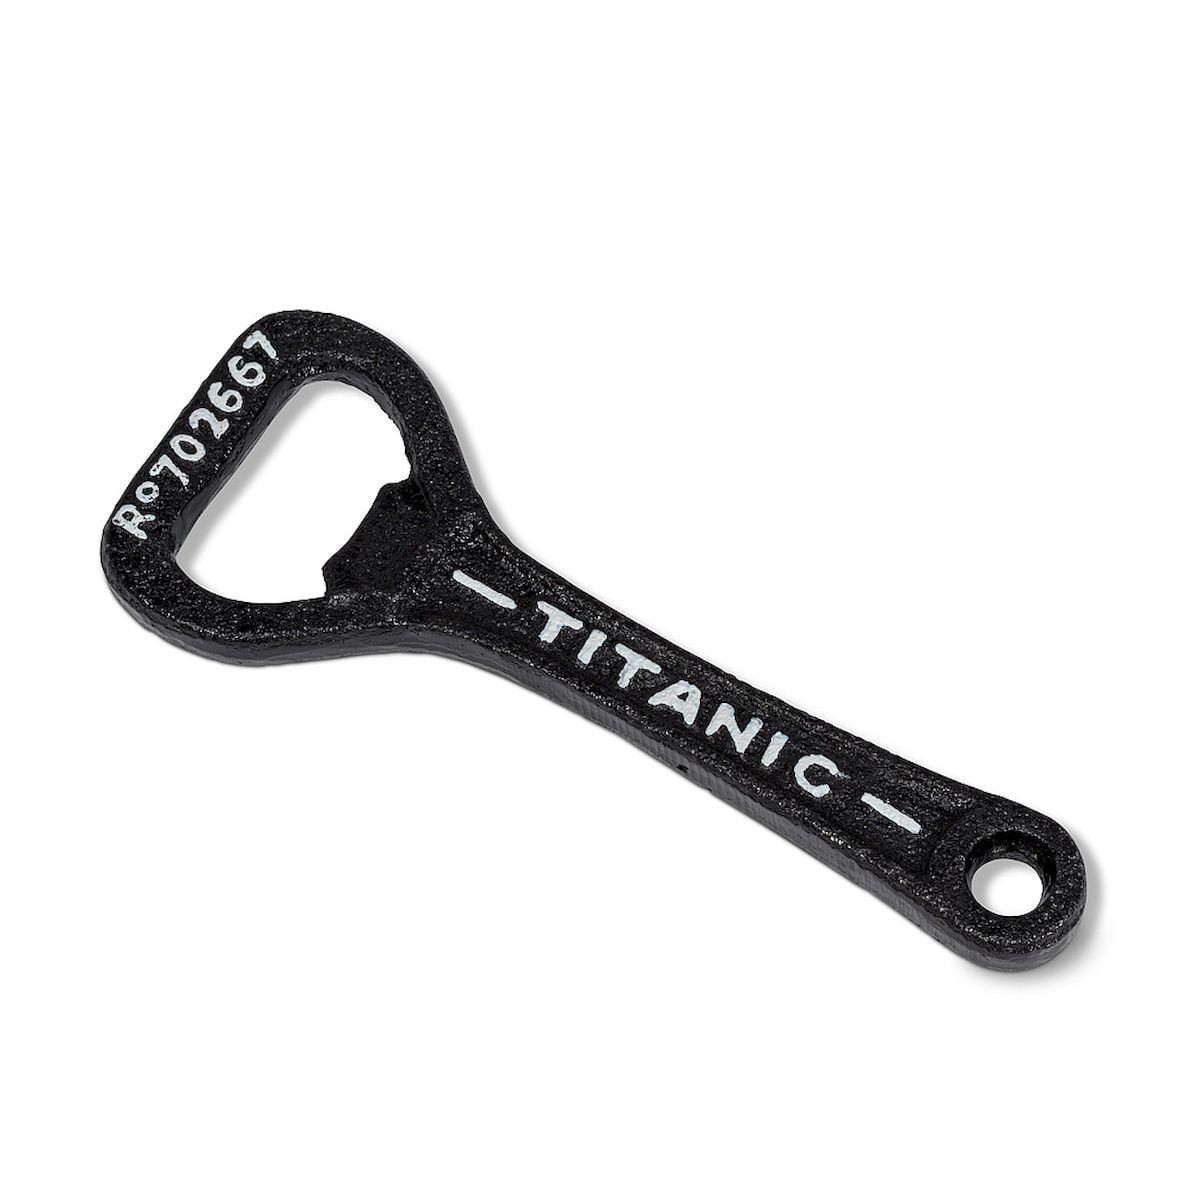 "TITANIC" ANTIQUE CAST IRON HAND HELD BOTTLE OPENER 